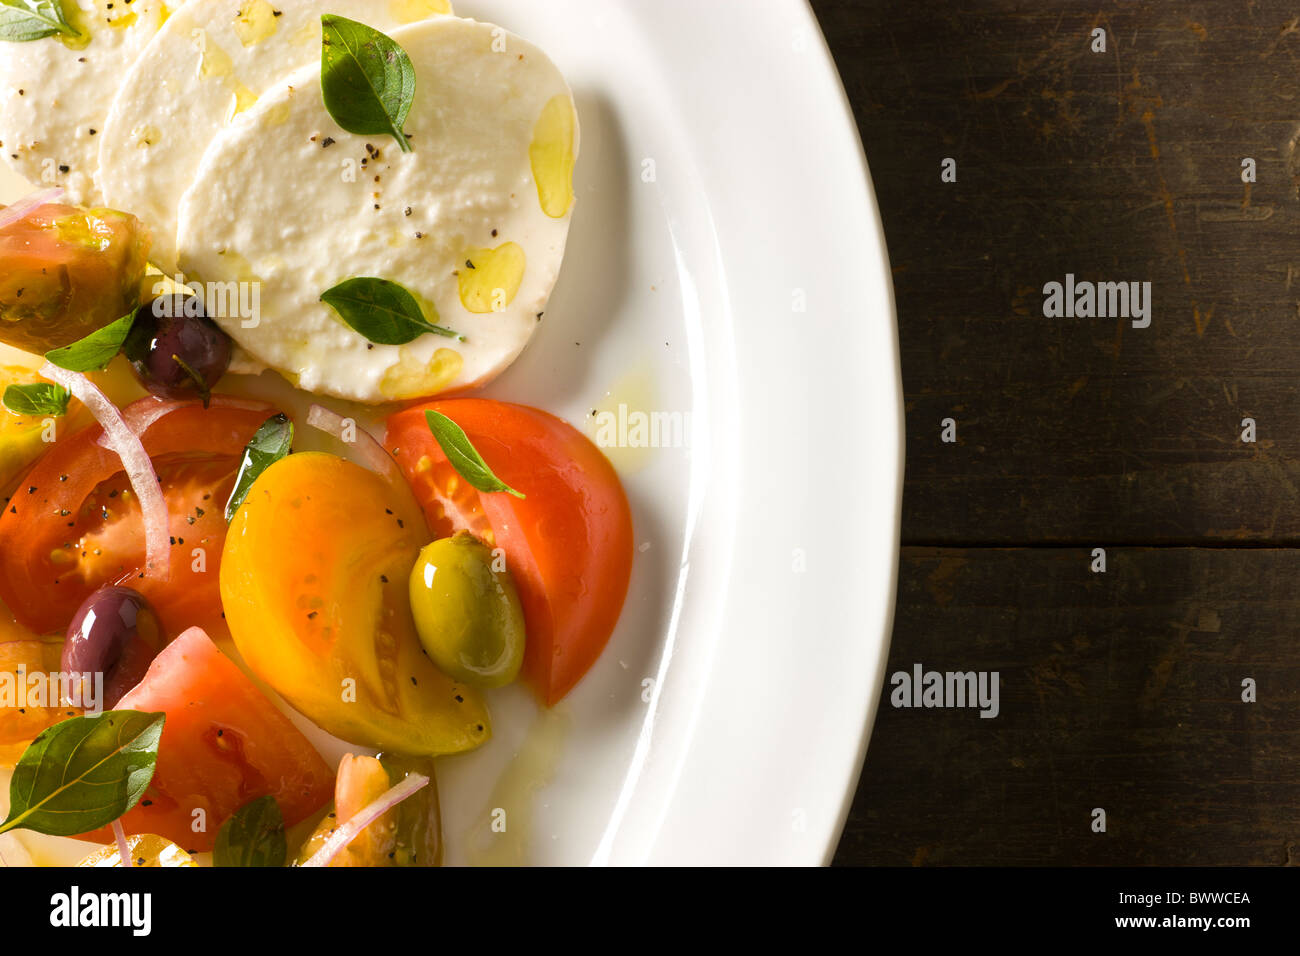 Mozzarella with Tomato and Olive variety, Olive Oil and Fresh Oregano Stock Photo